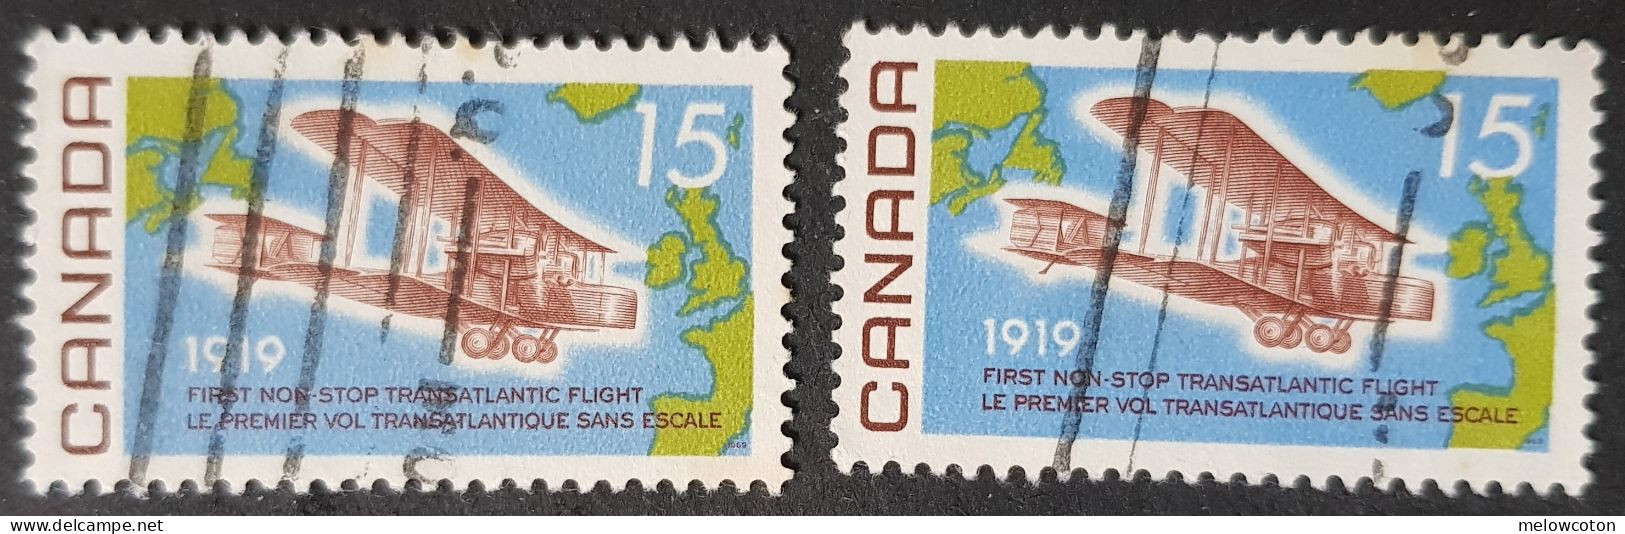 Lot CANADA - Airmail